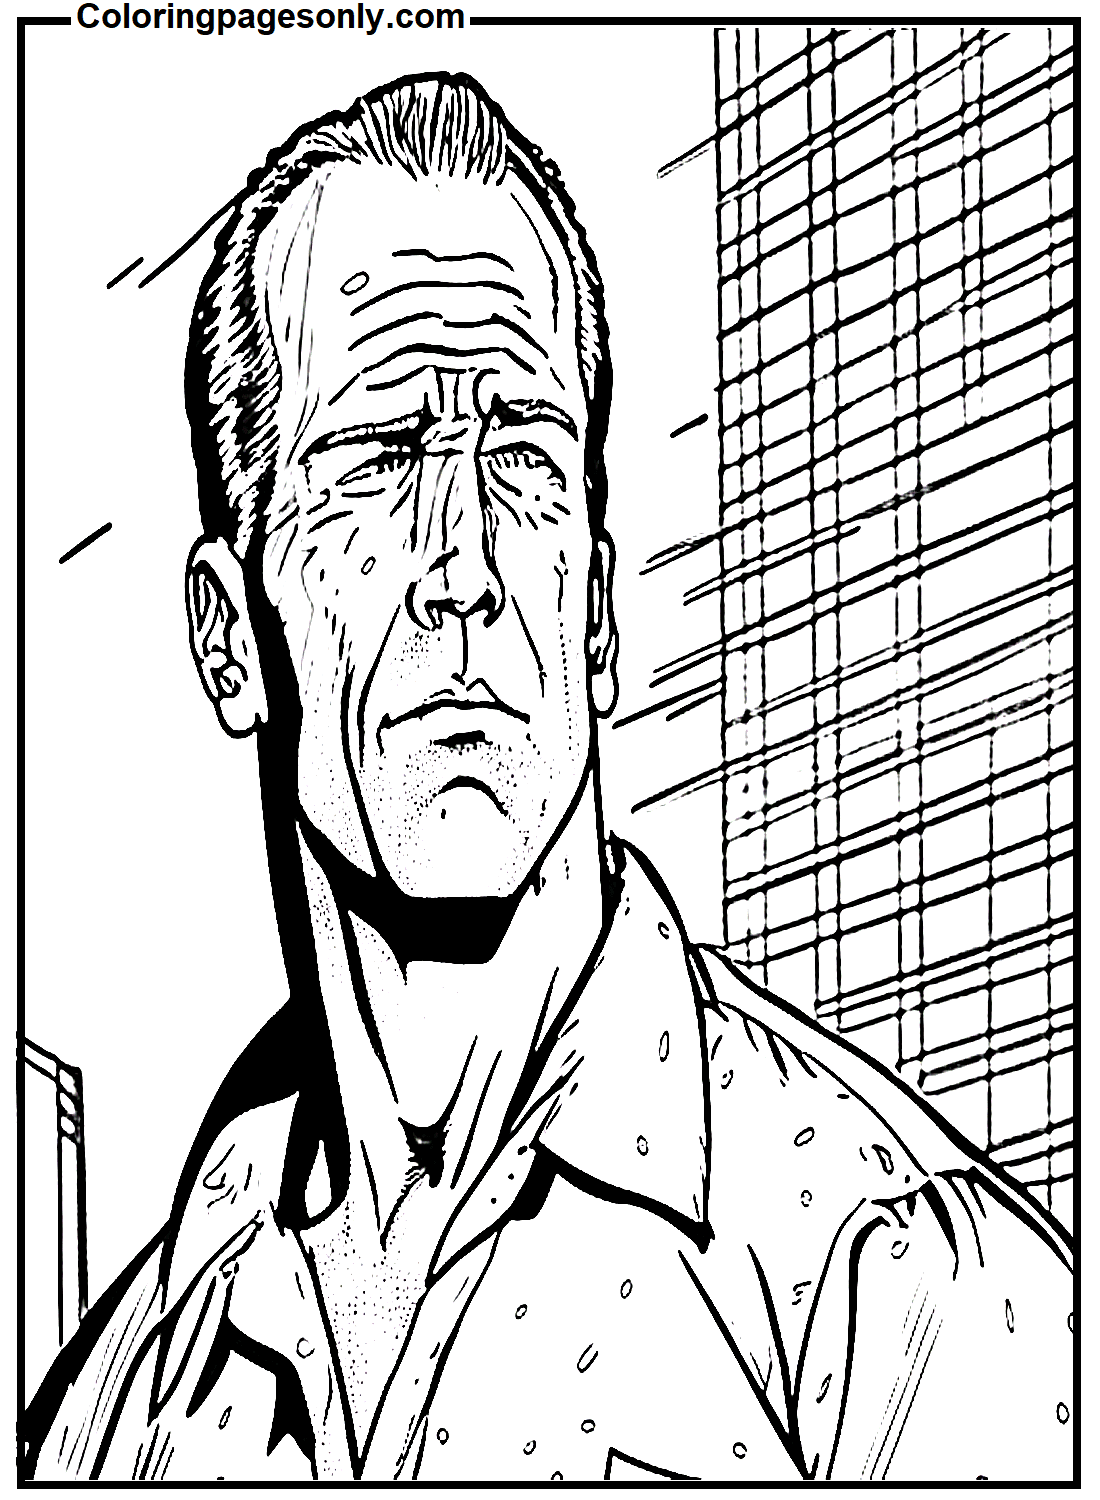 Bruce Willis als John McClane Bild von Bruce Willis